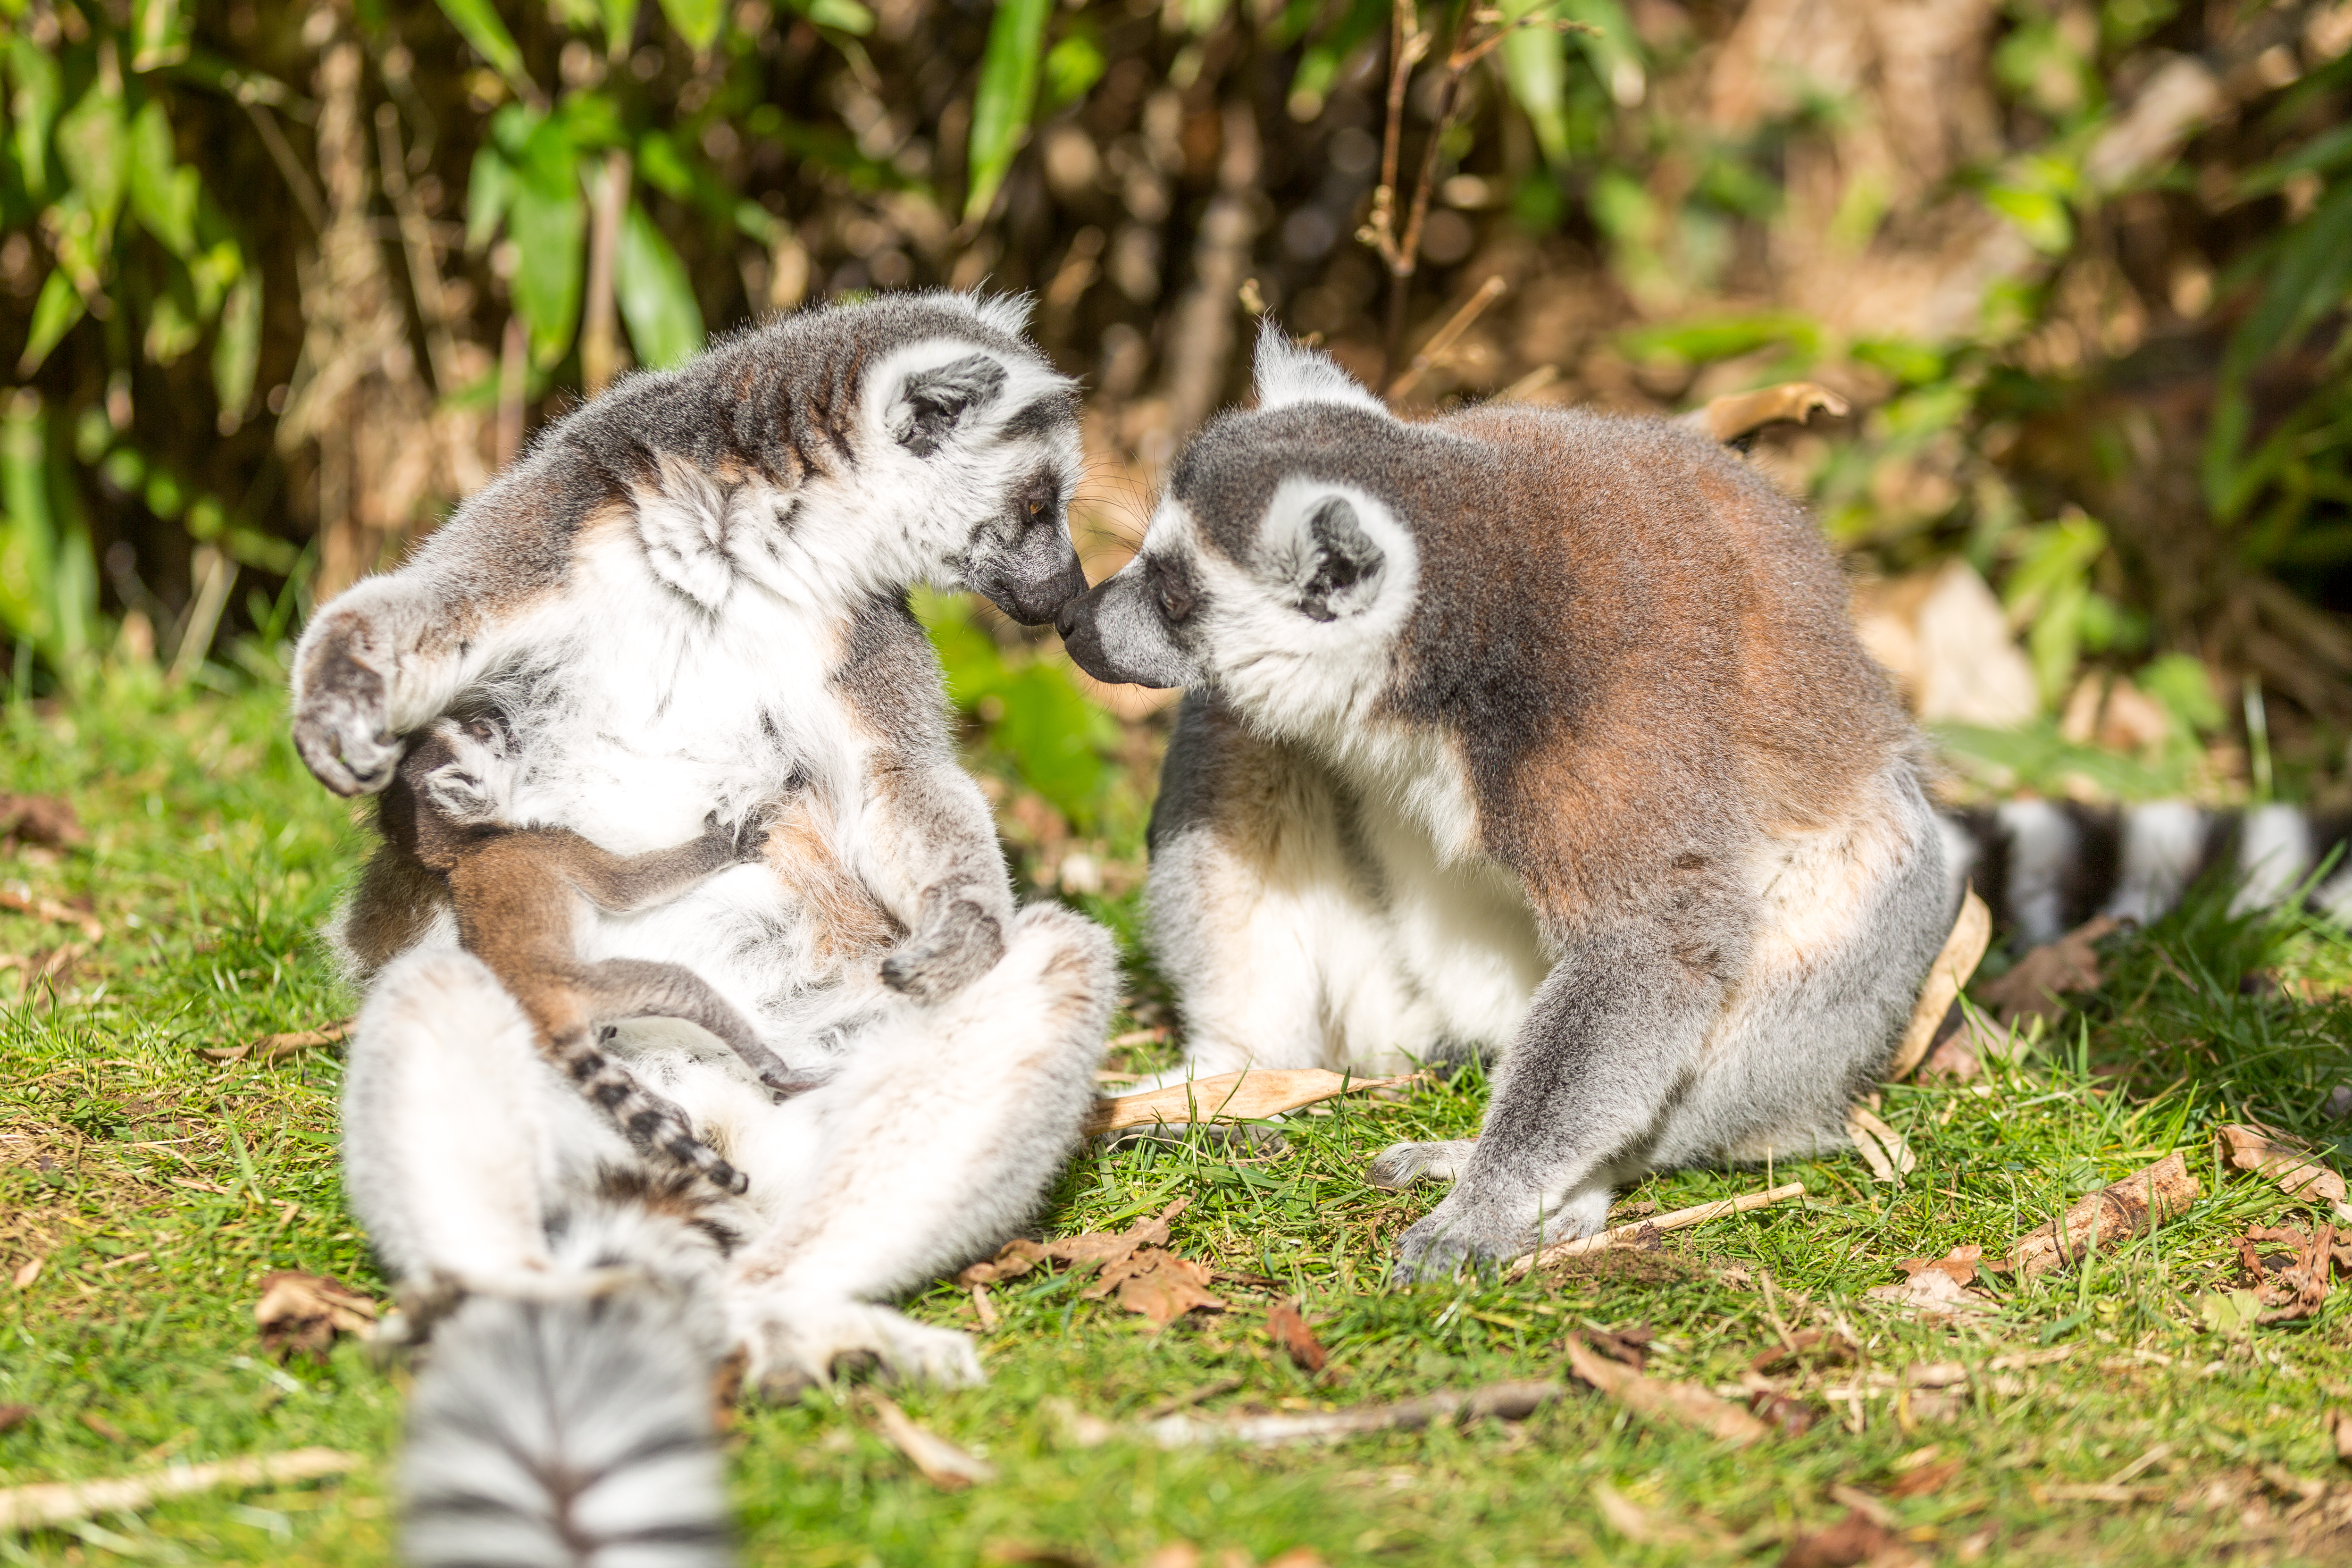 Newborn lemur at Woburn Safari Park with its mother (Woburn Safari Park)